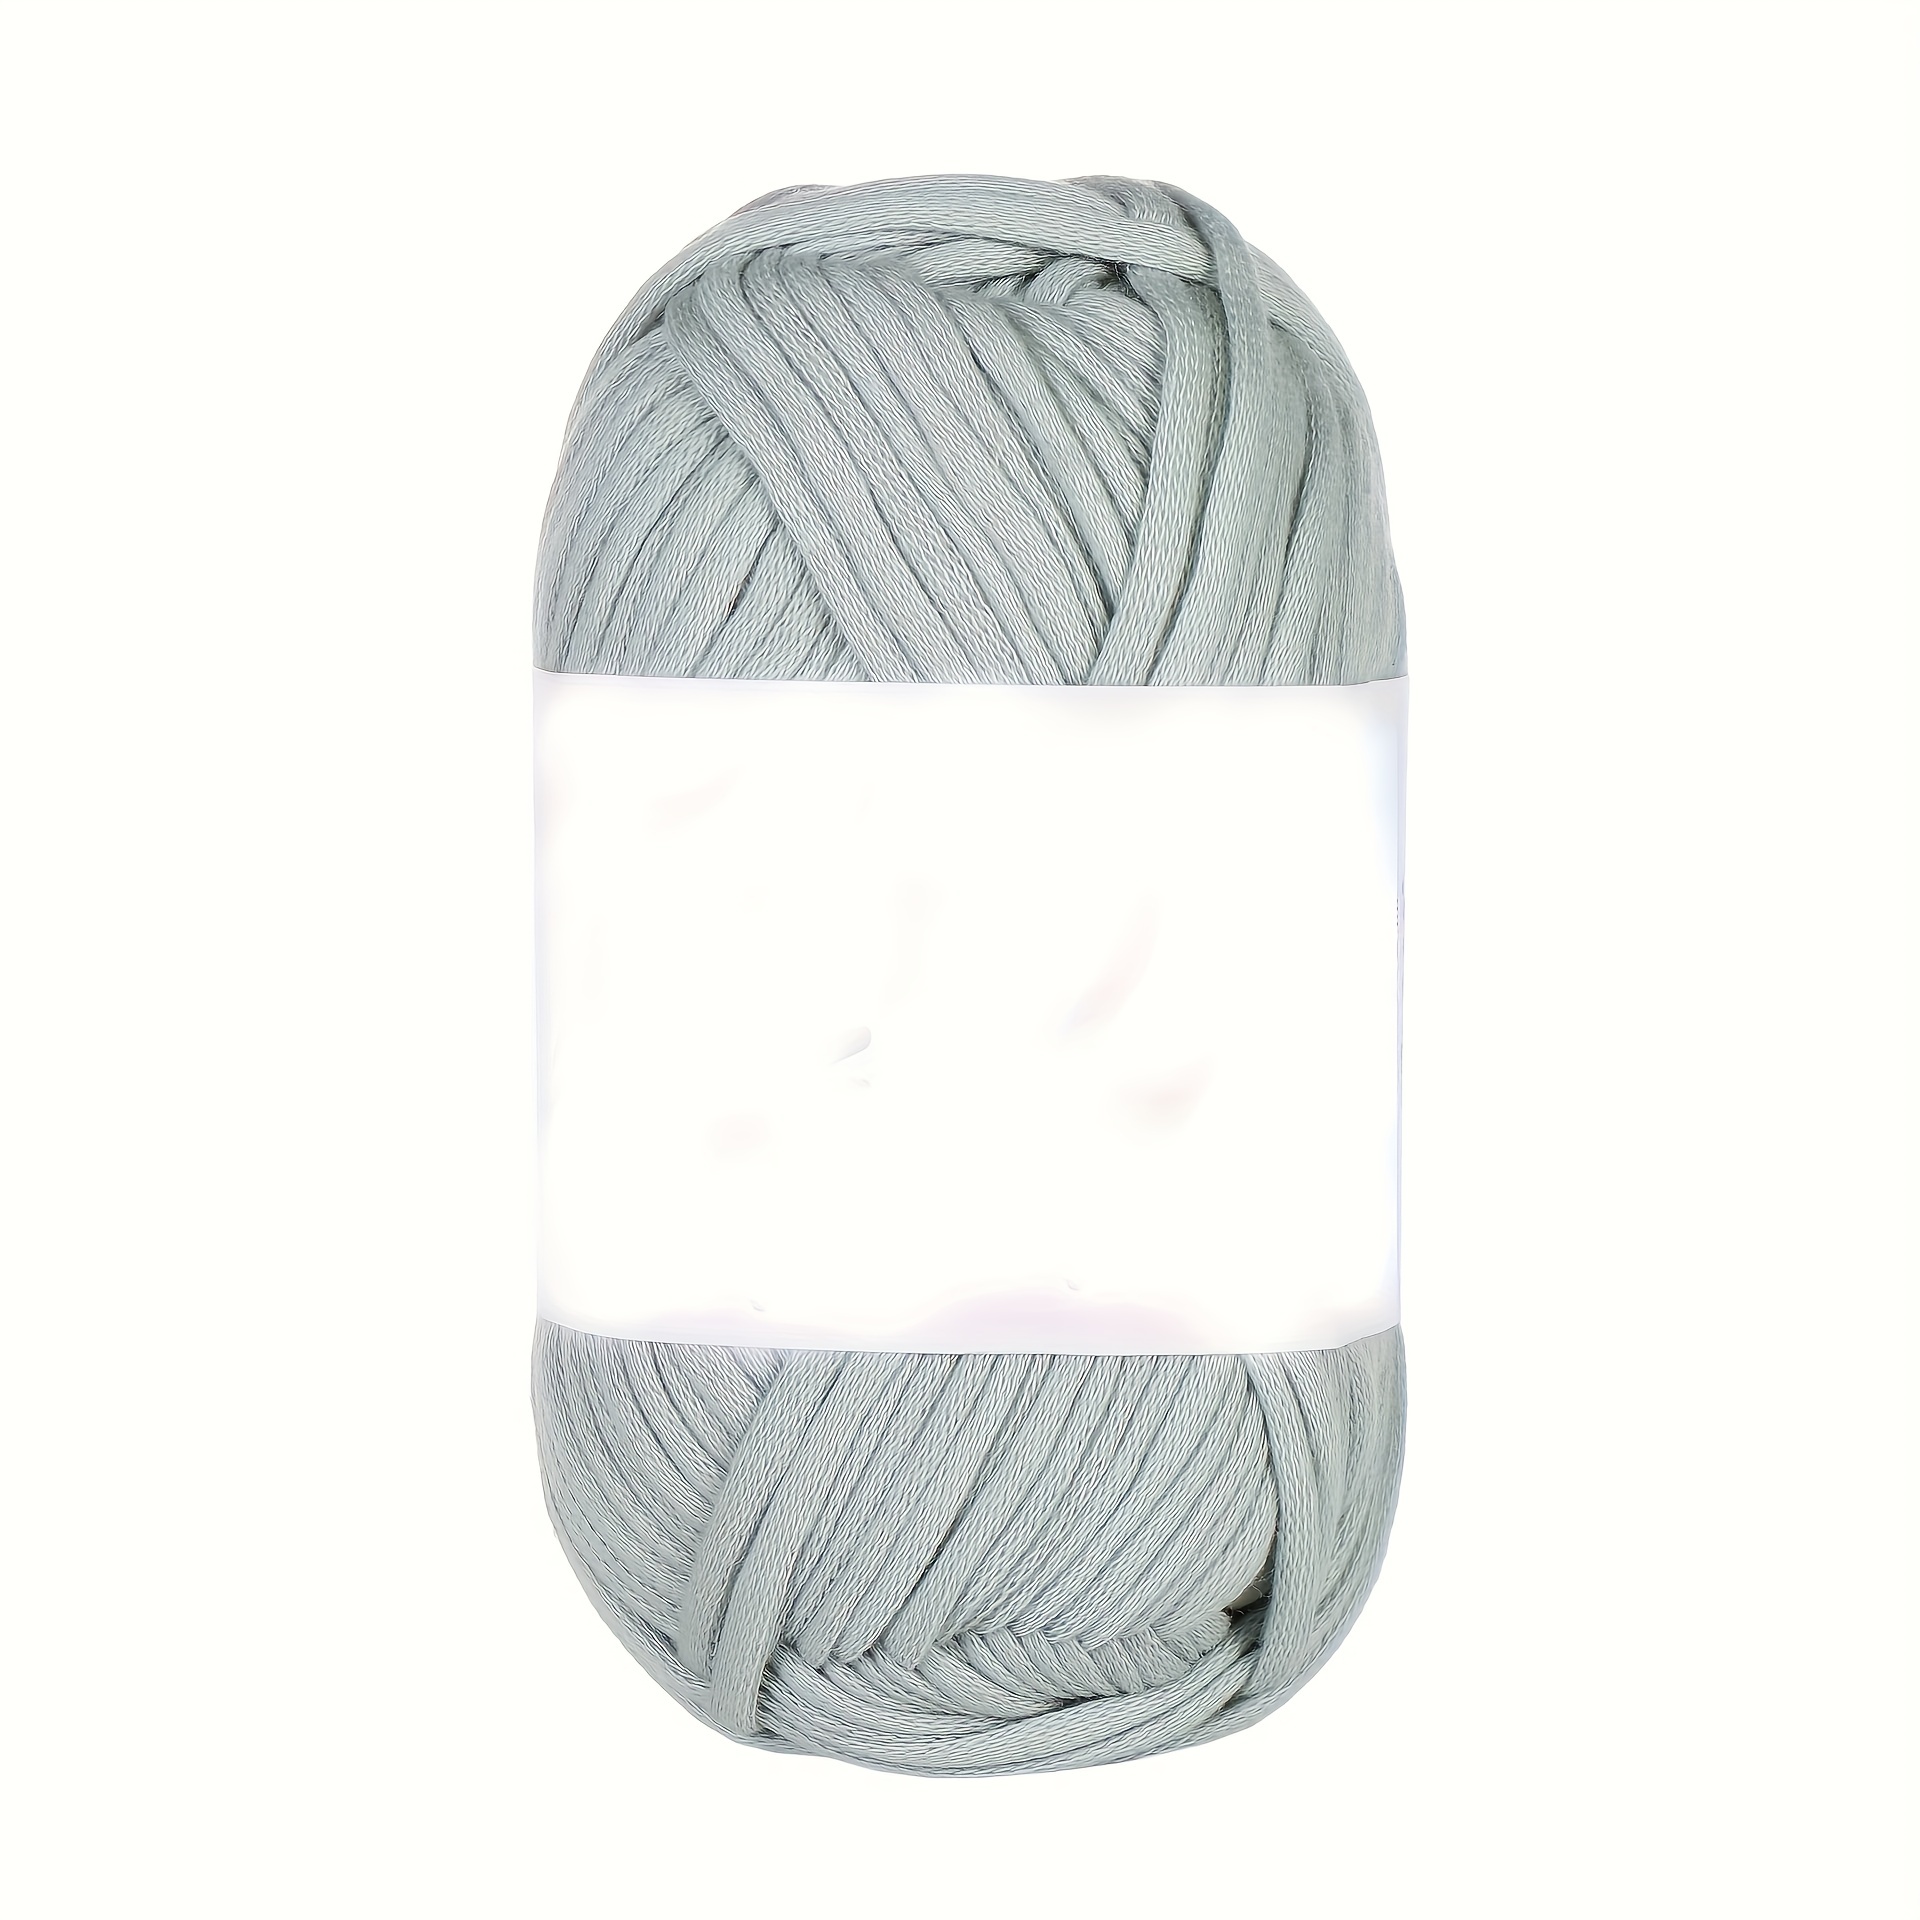  CLISIL 70% Cotton Blend 30% Nylon Tube Yarn Light